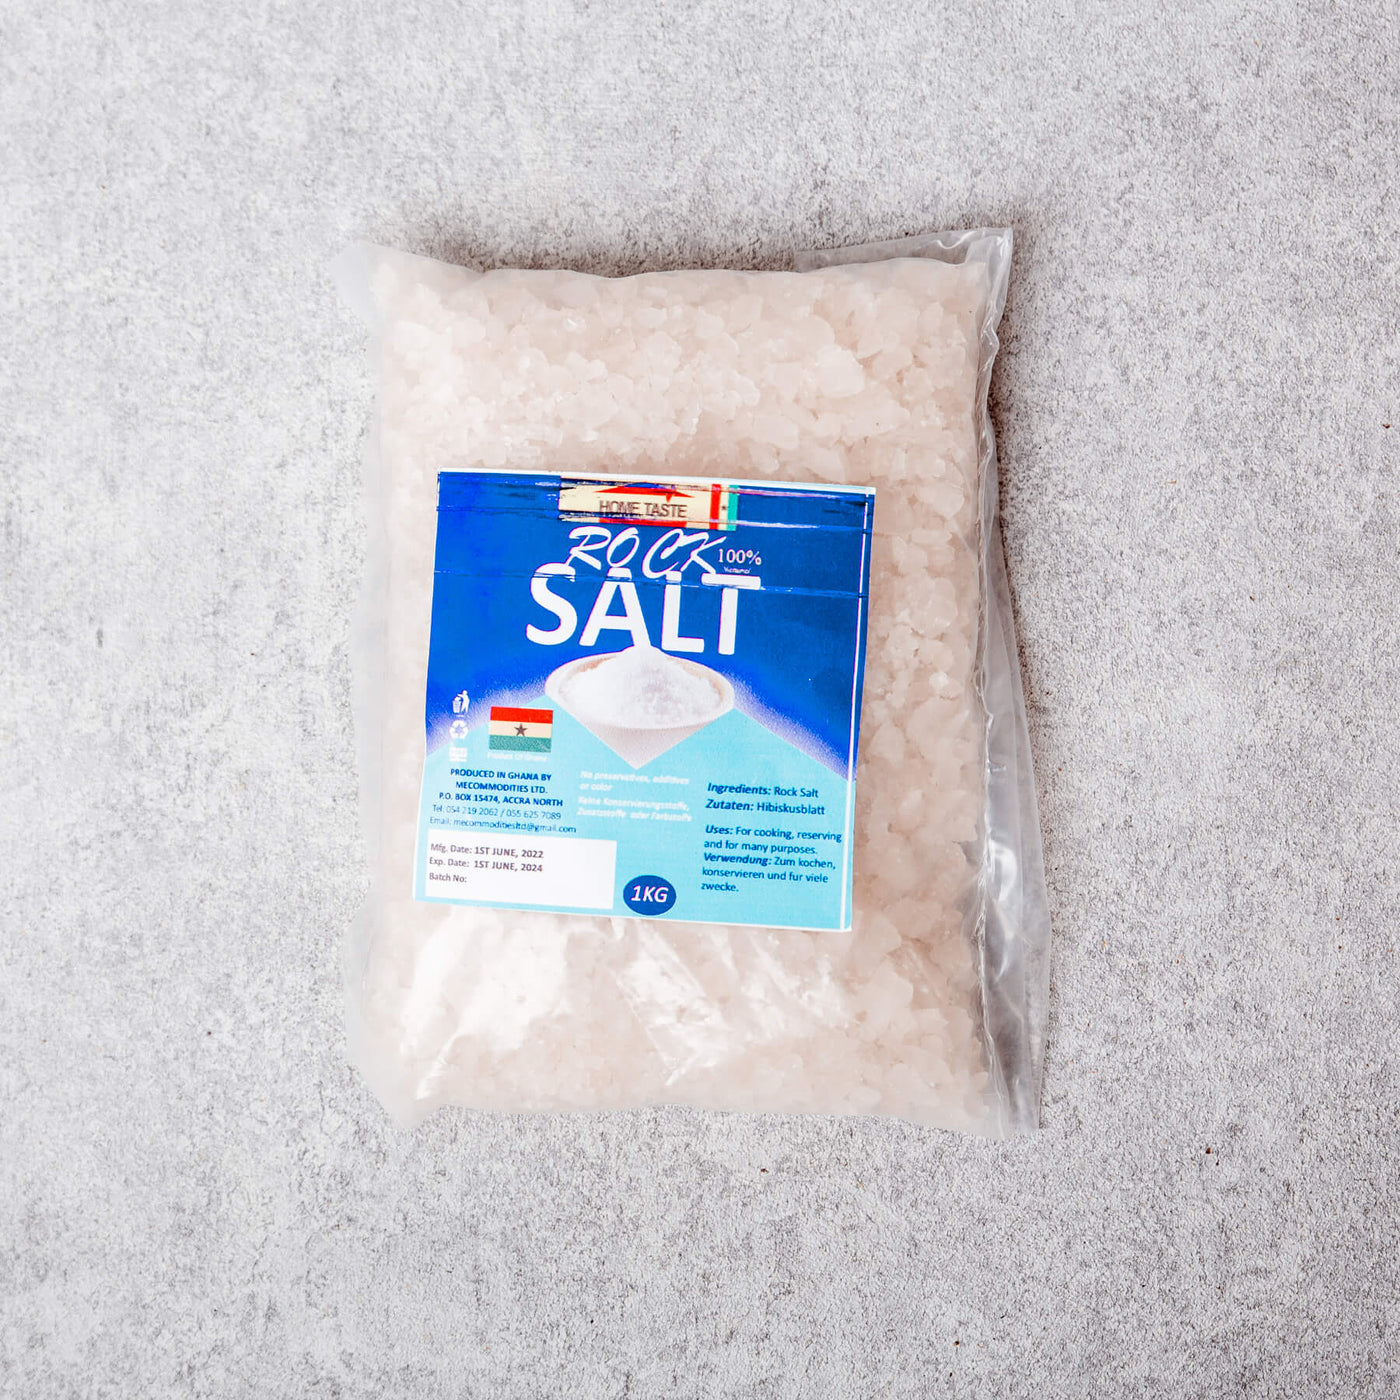 Home Key - Rock Salt from Ghana